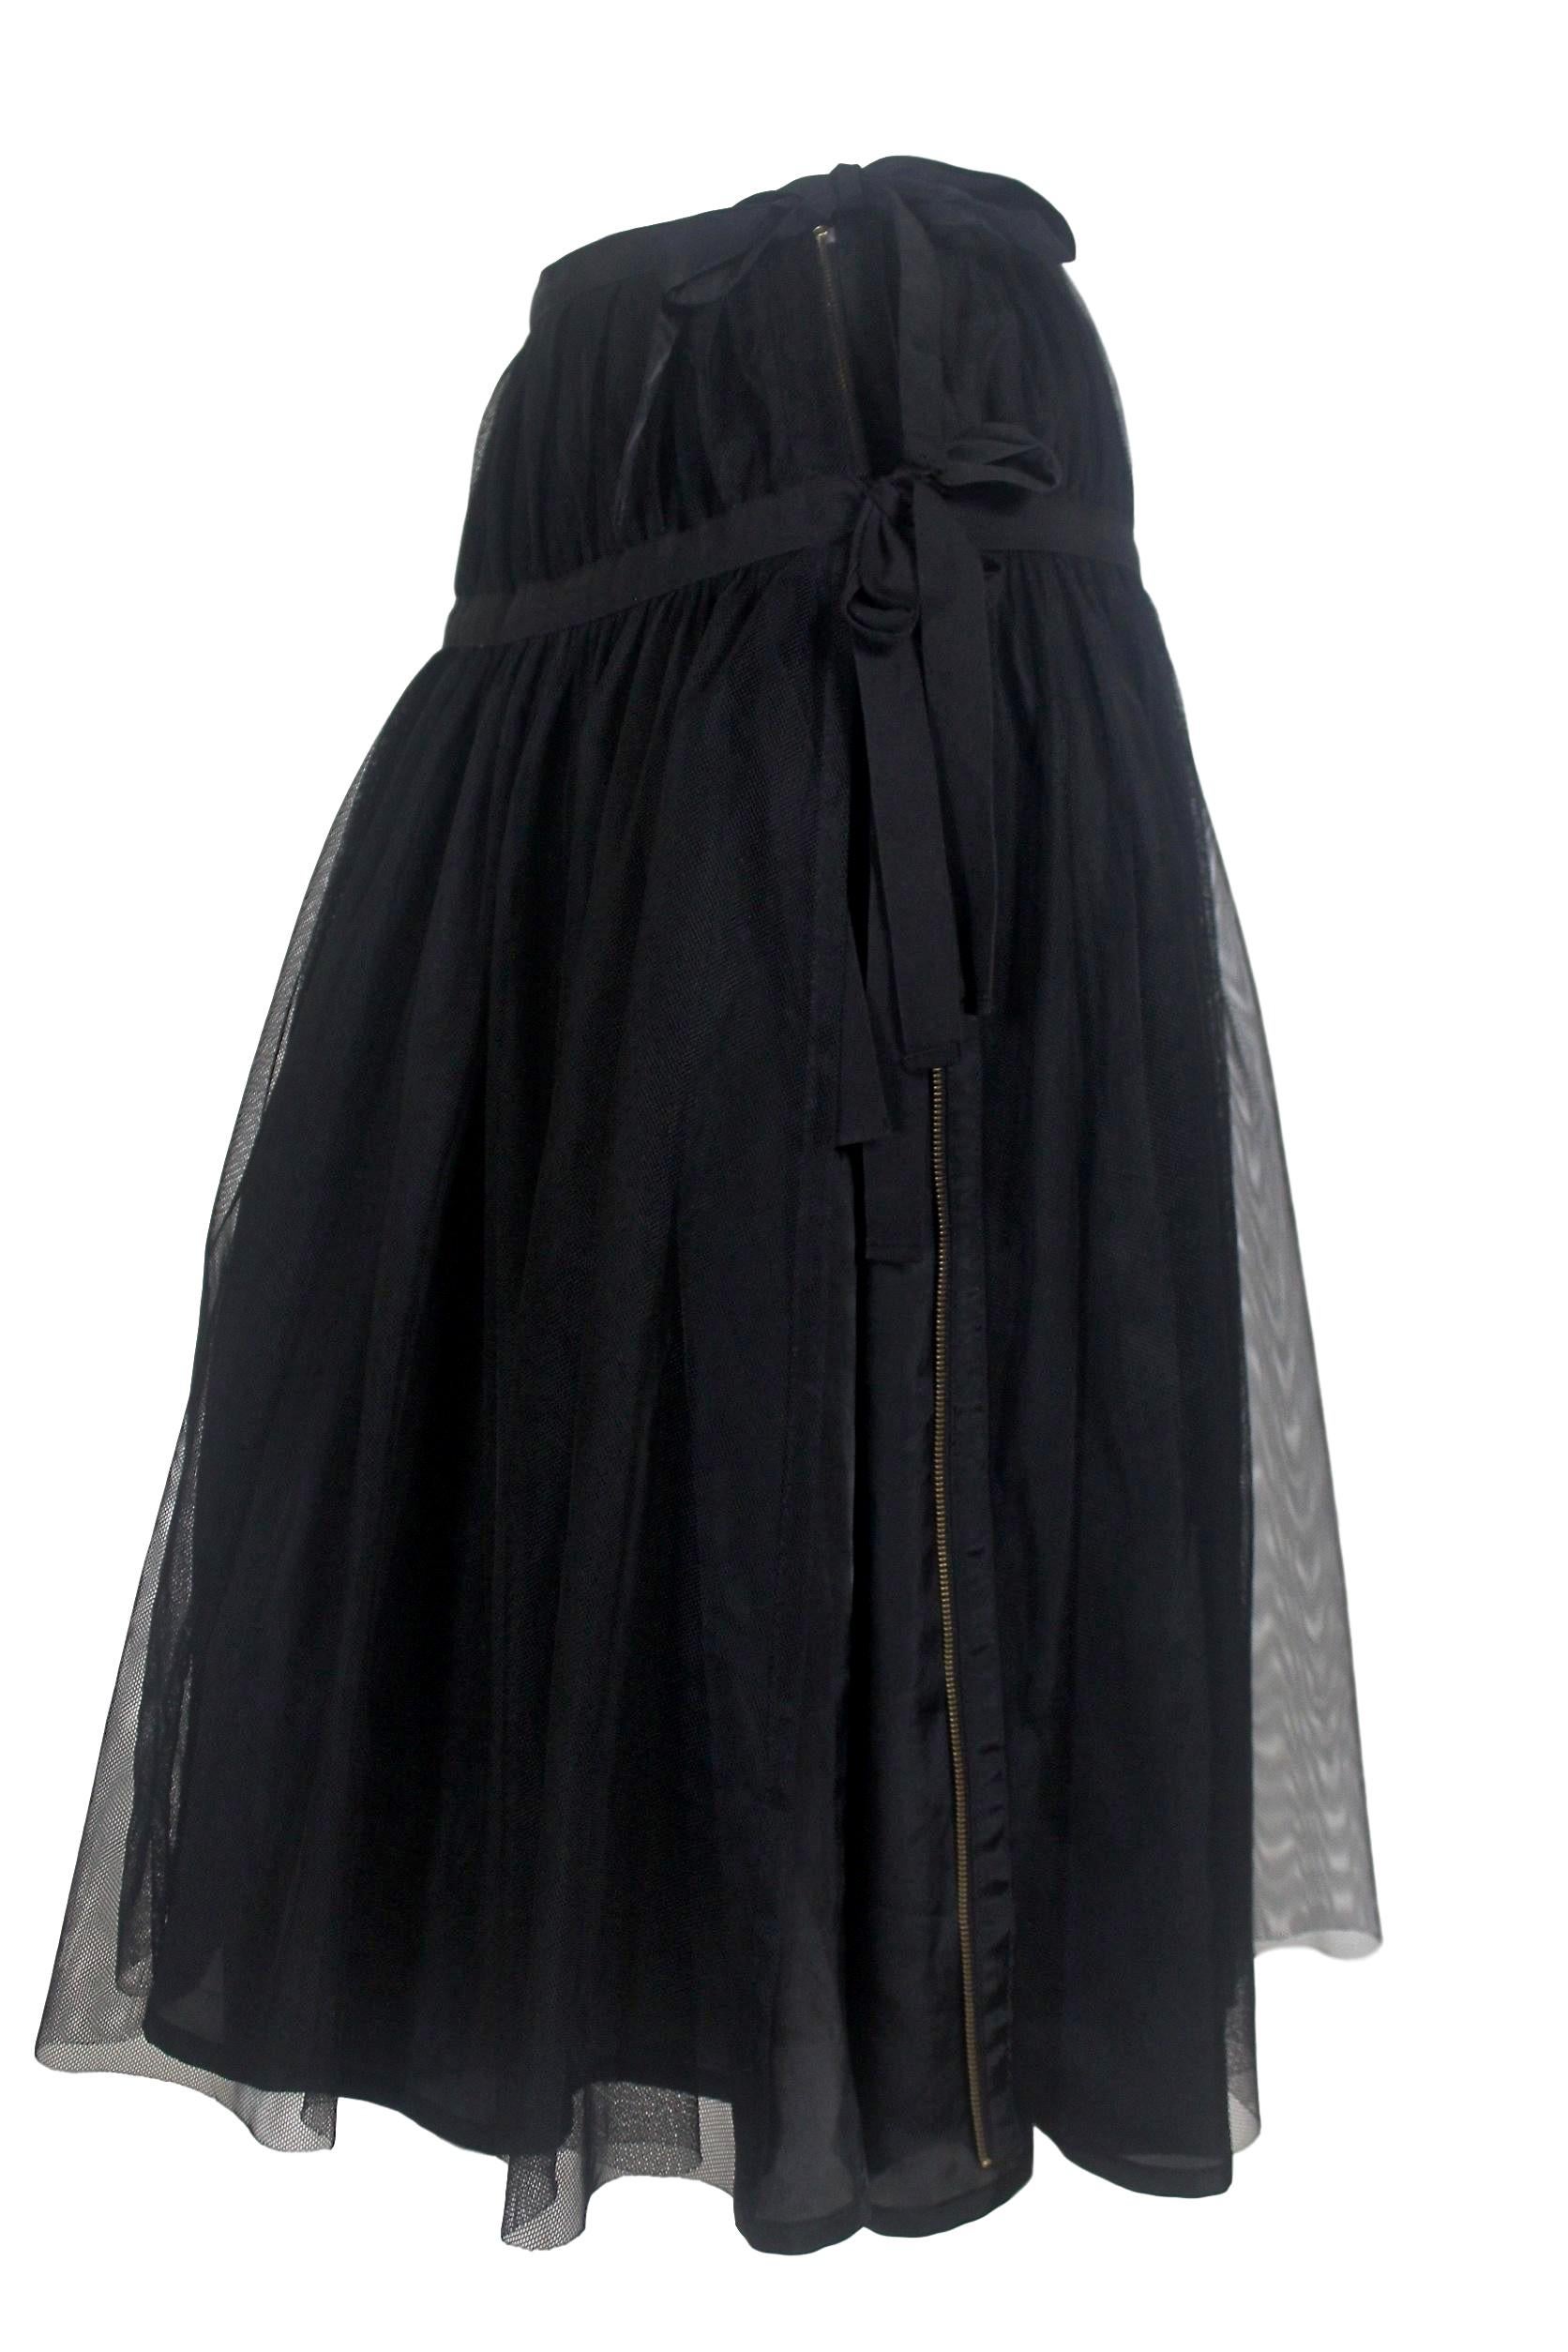 Comme des Garcons Tricot Double Layer Wrap Skirt 2007 For Sale 7